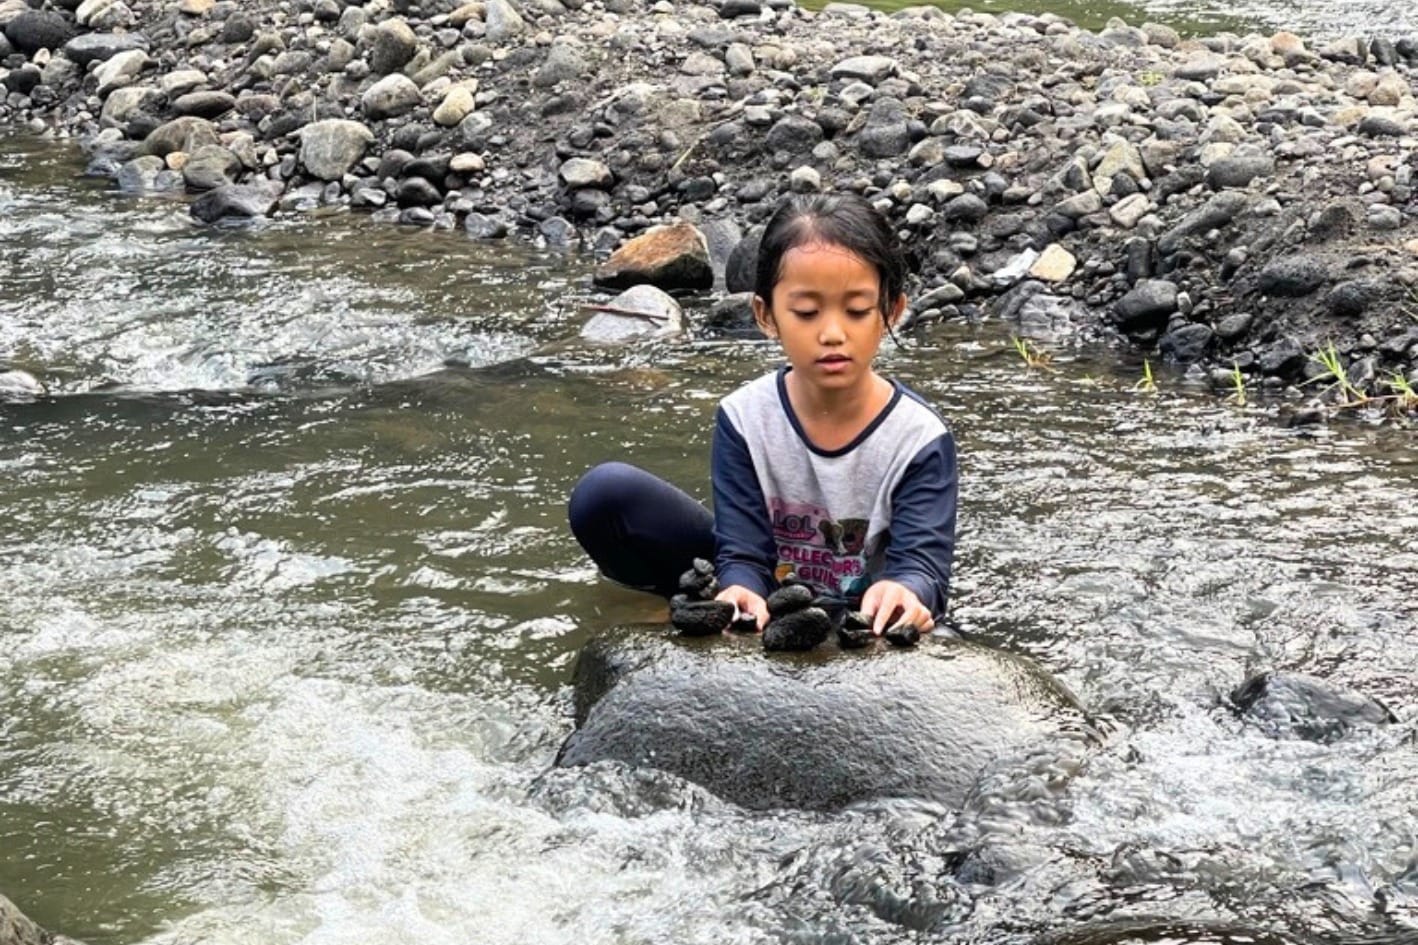 Manfaat Bermain di Sungai untuk Anak